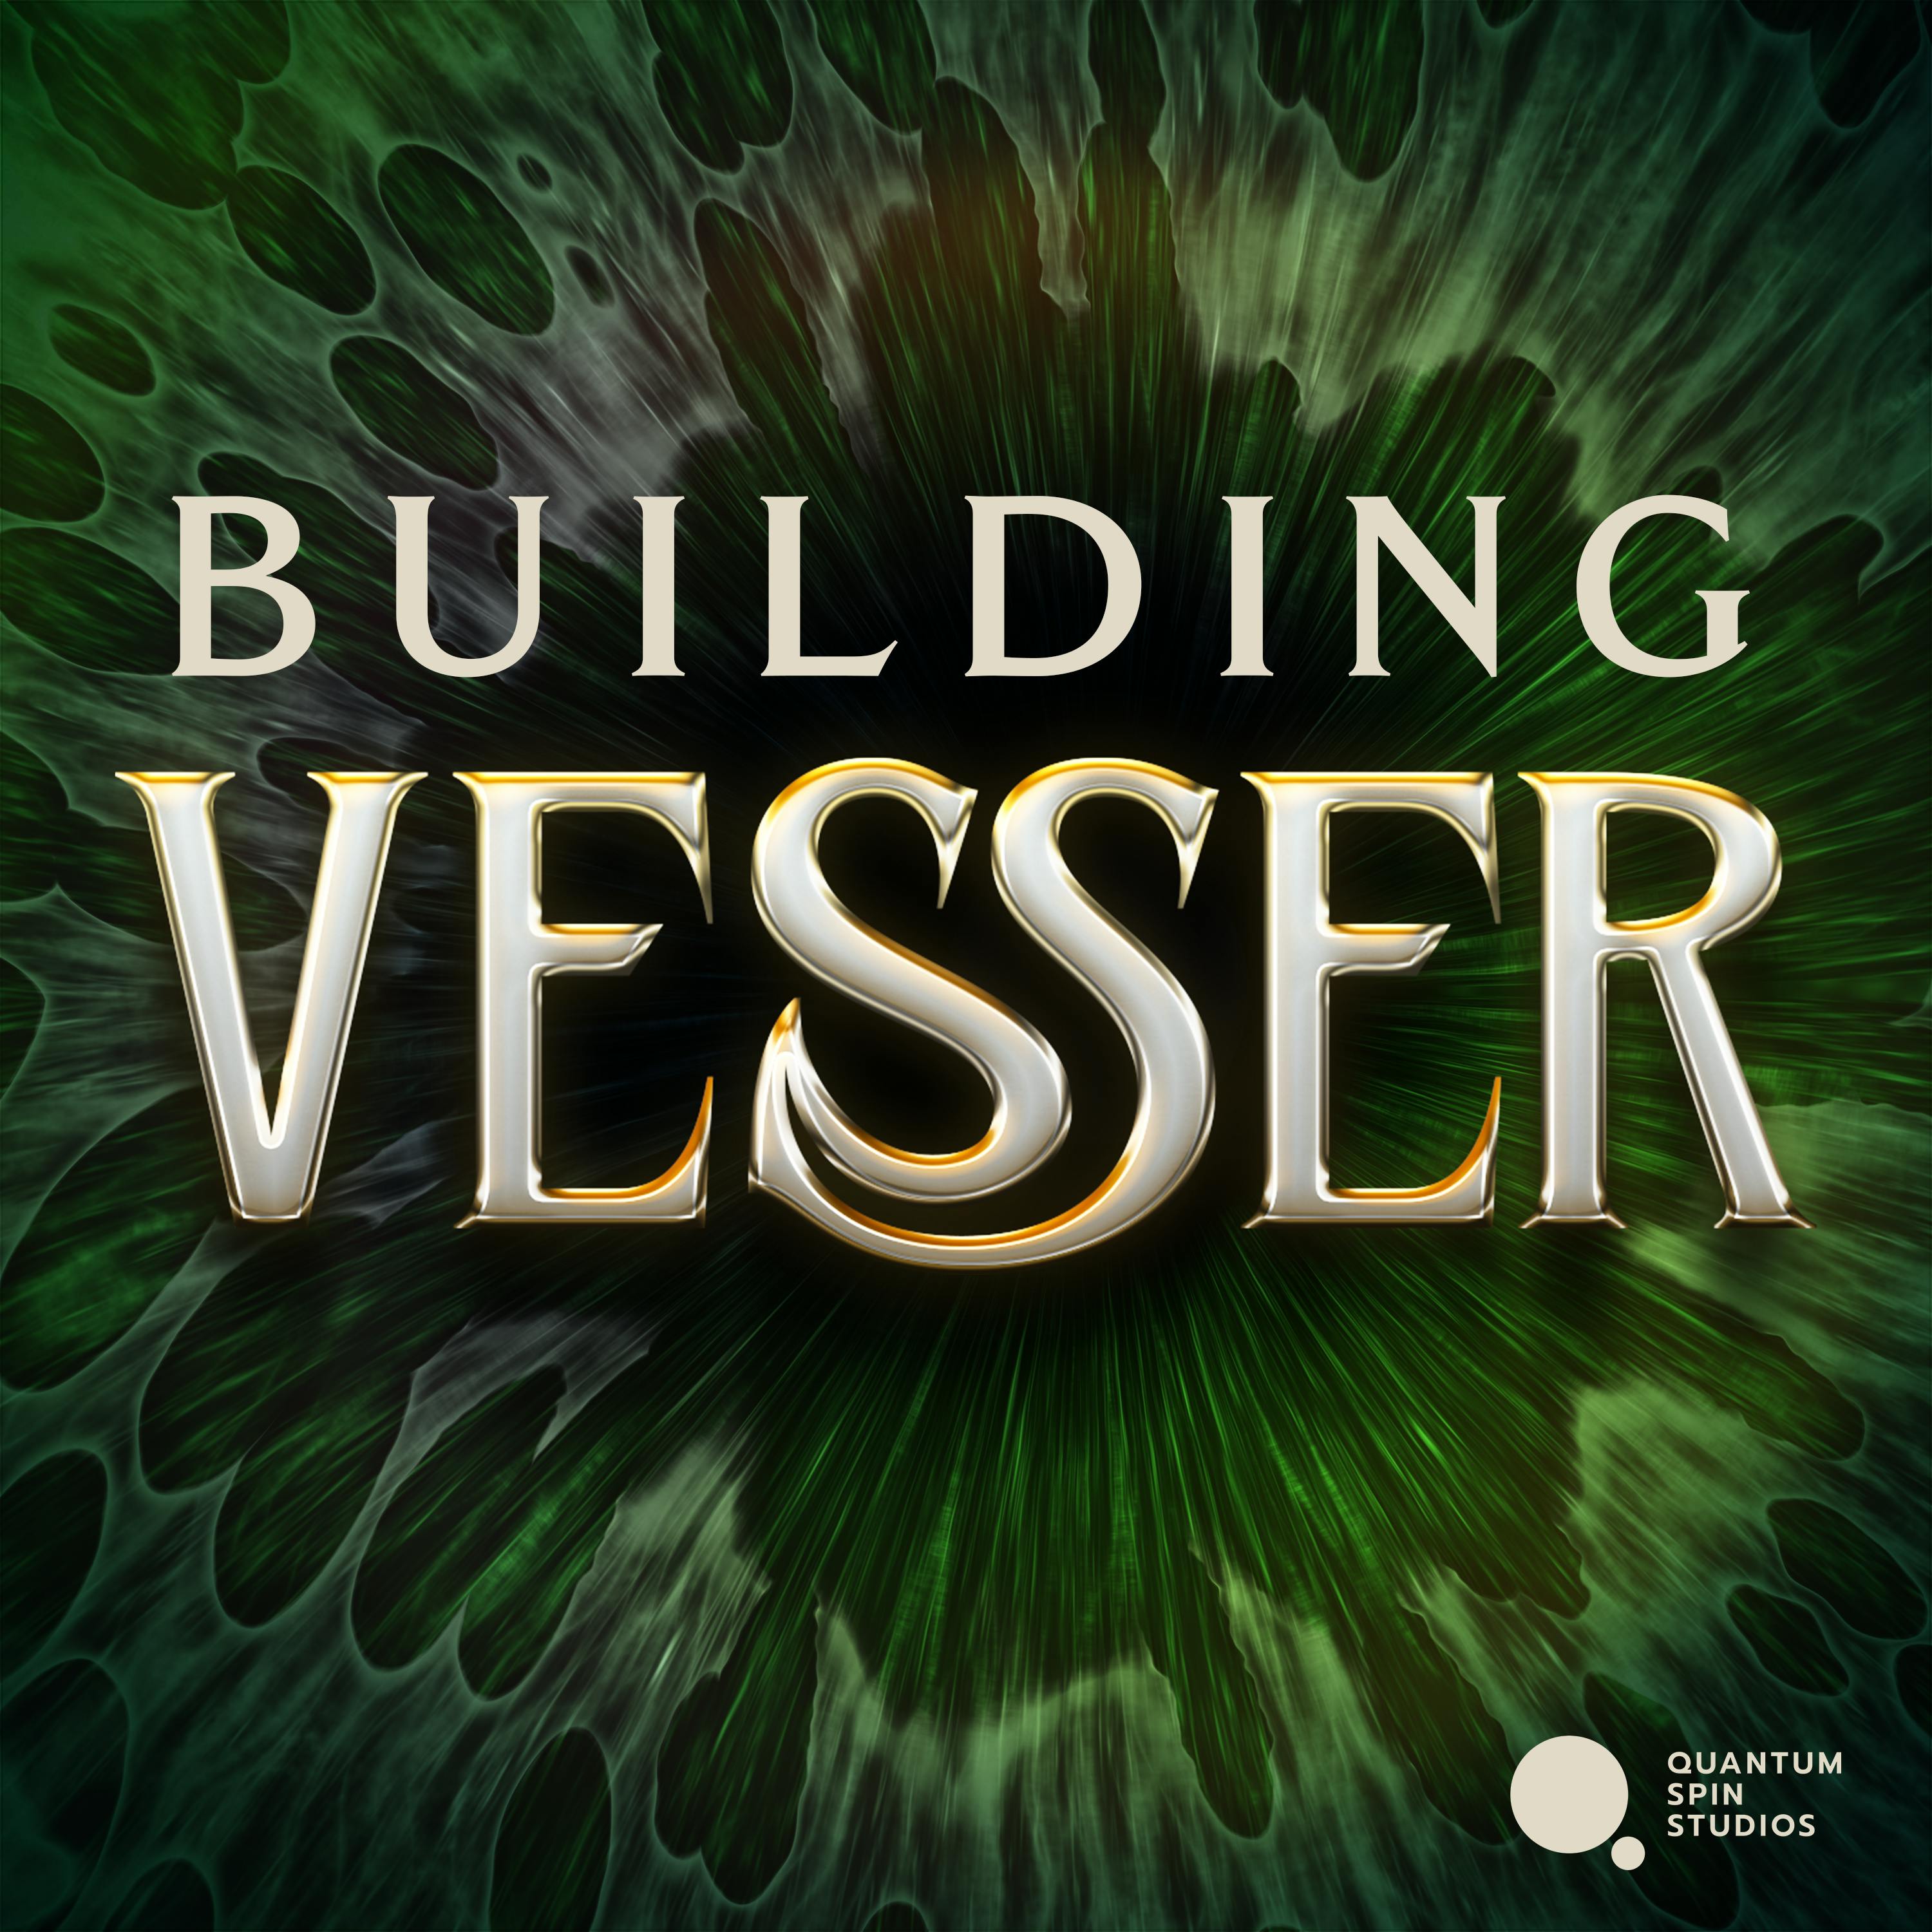 Building Vesser: Architecture, Squirrels, and Art